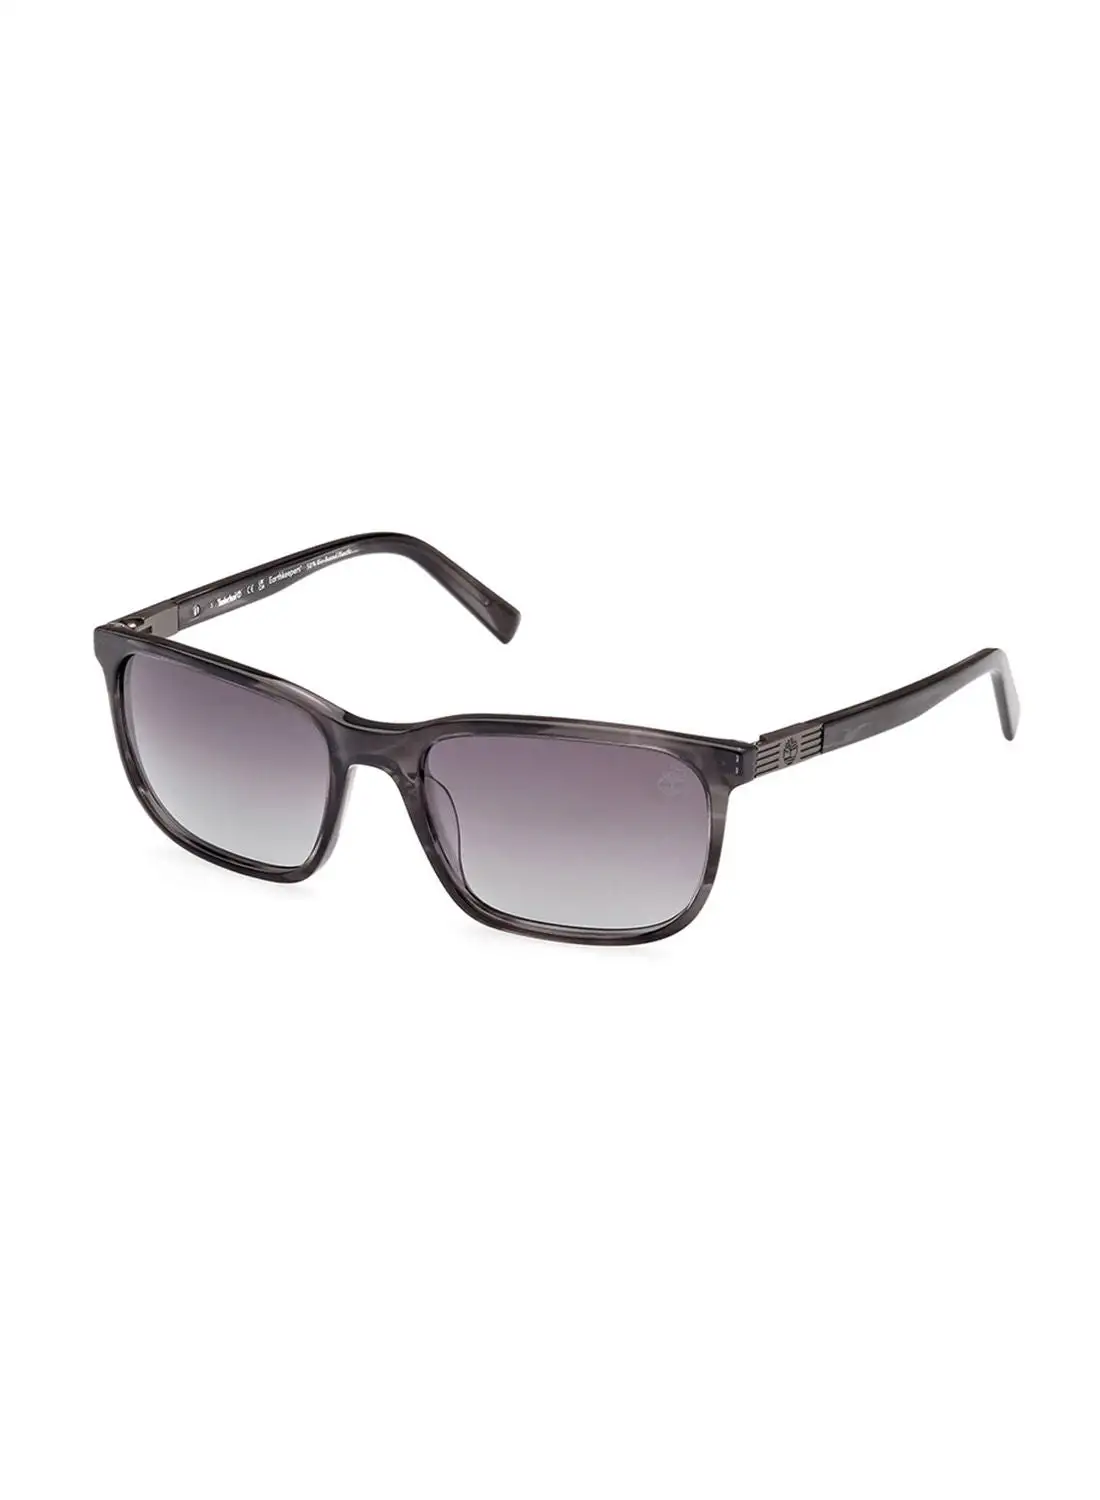 Timberland Sunglasses For Men TB931820D56